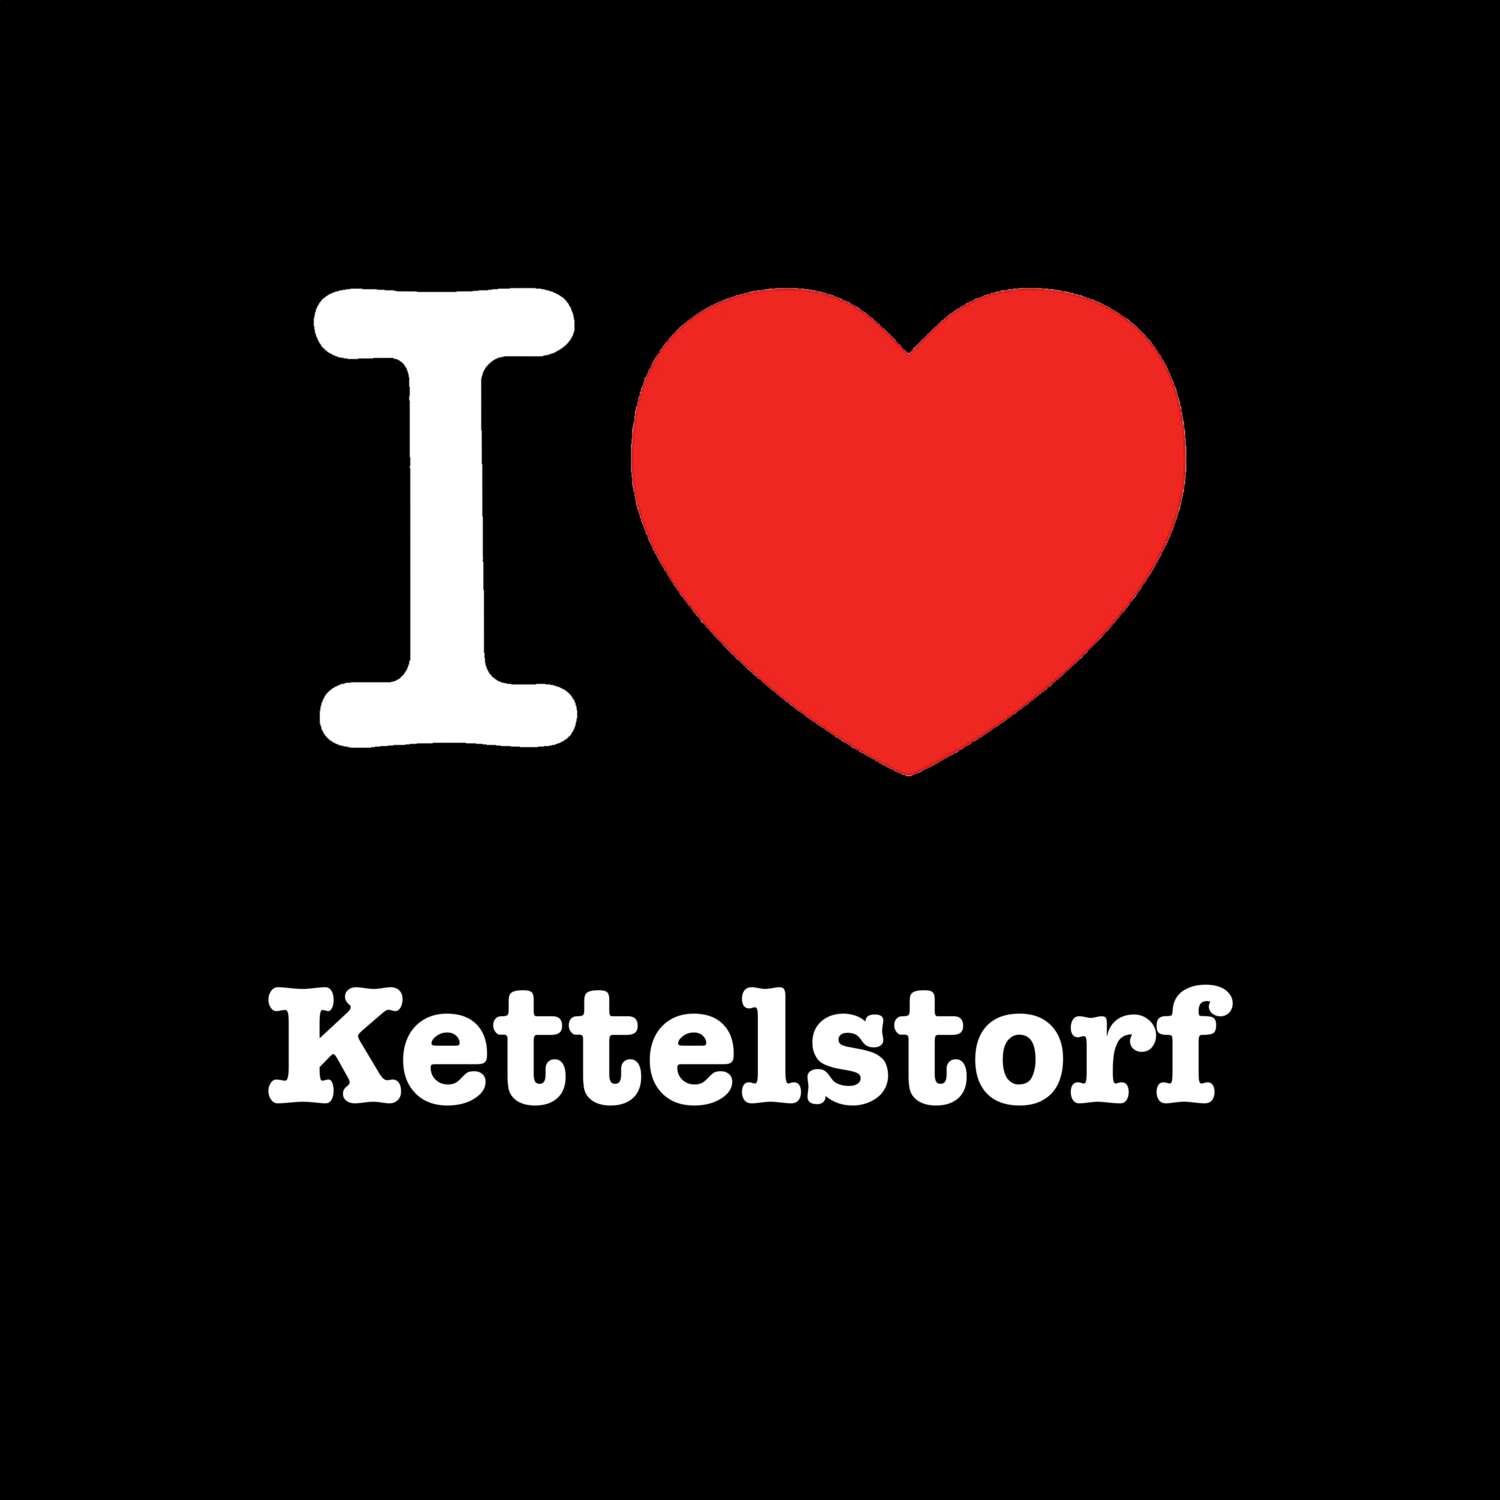 Kettelstorf T-Shirt »I love«